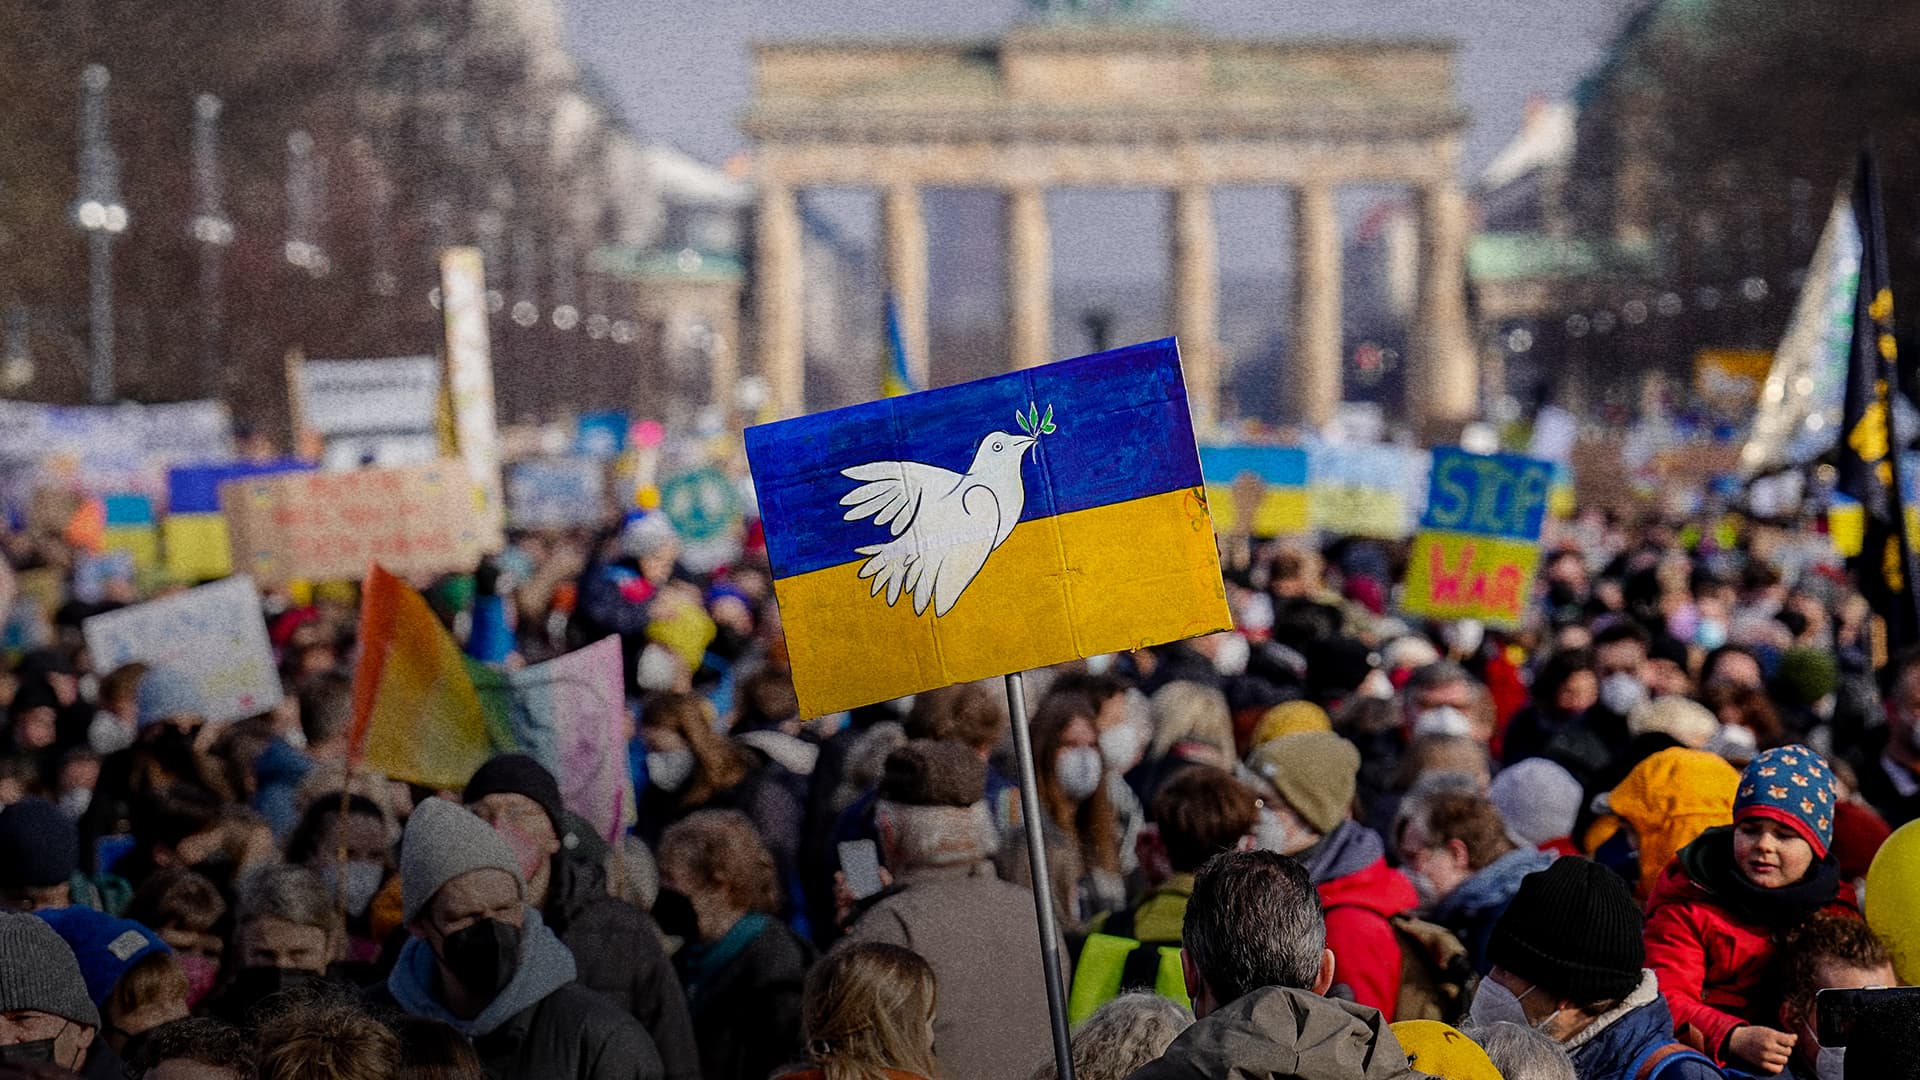 Demonstrators protest against the war in Ukraine in front of the Brandenburg Gate.